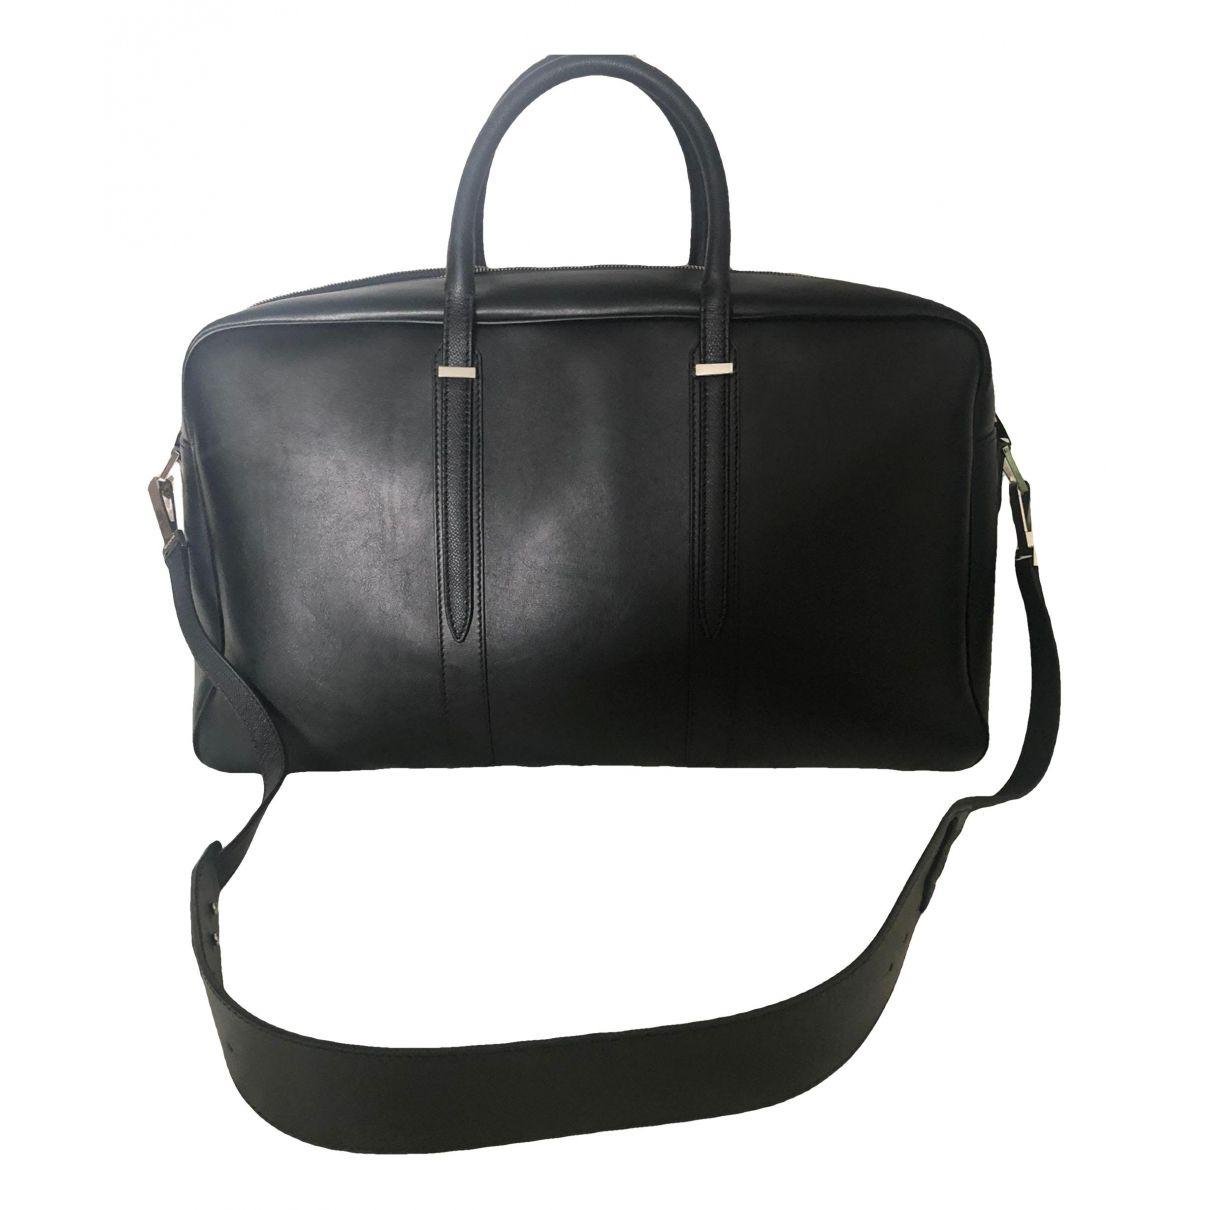 Leather travel bag by BALENCIAGA